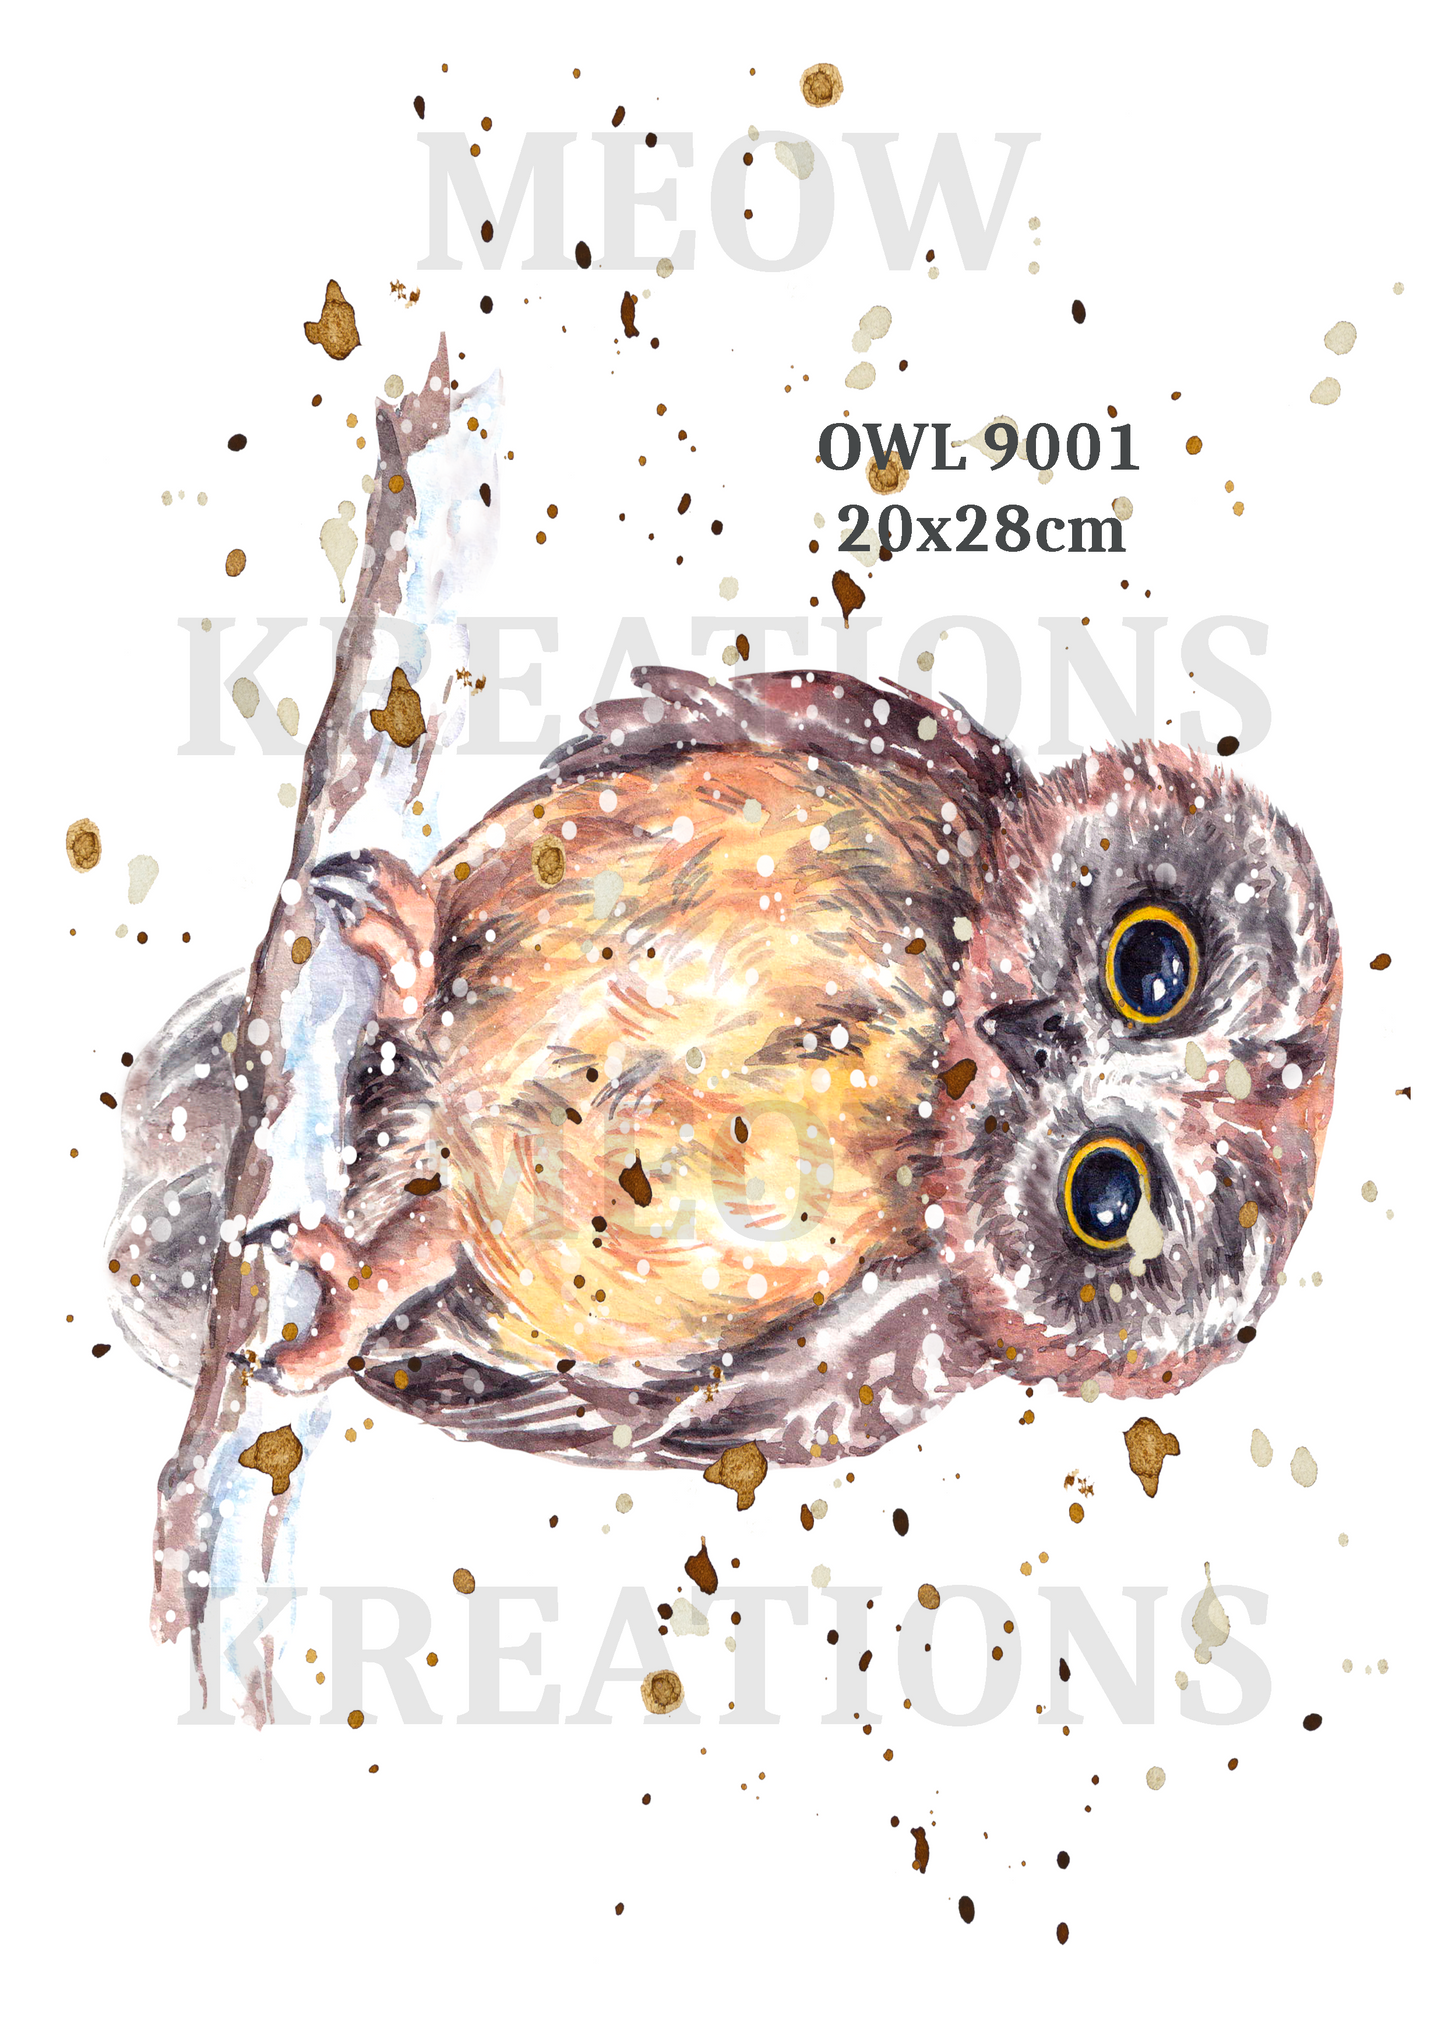 OWL 9001